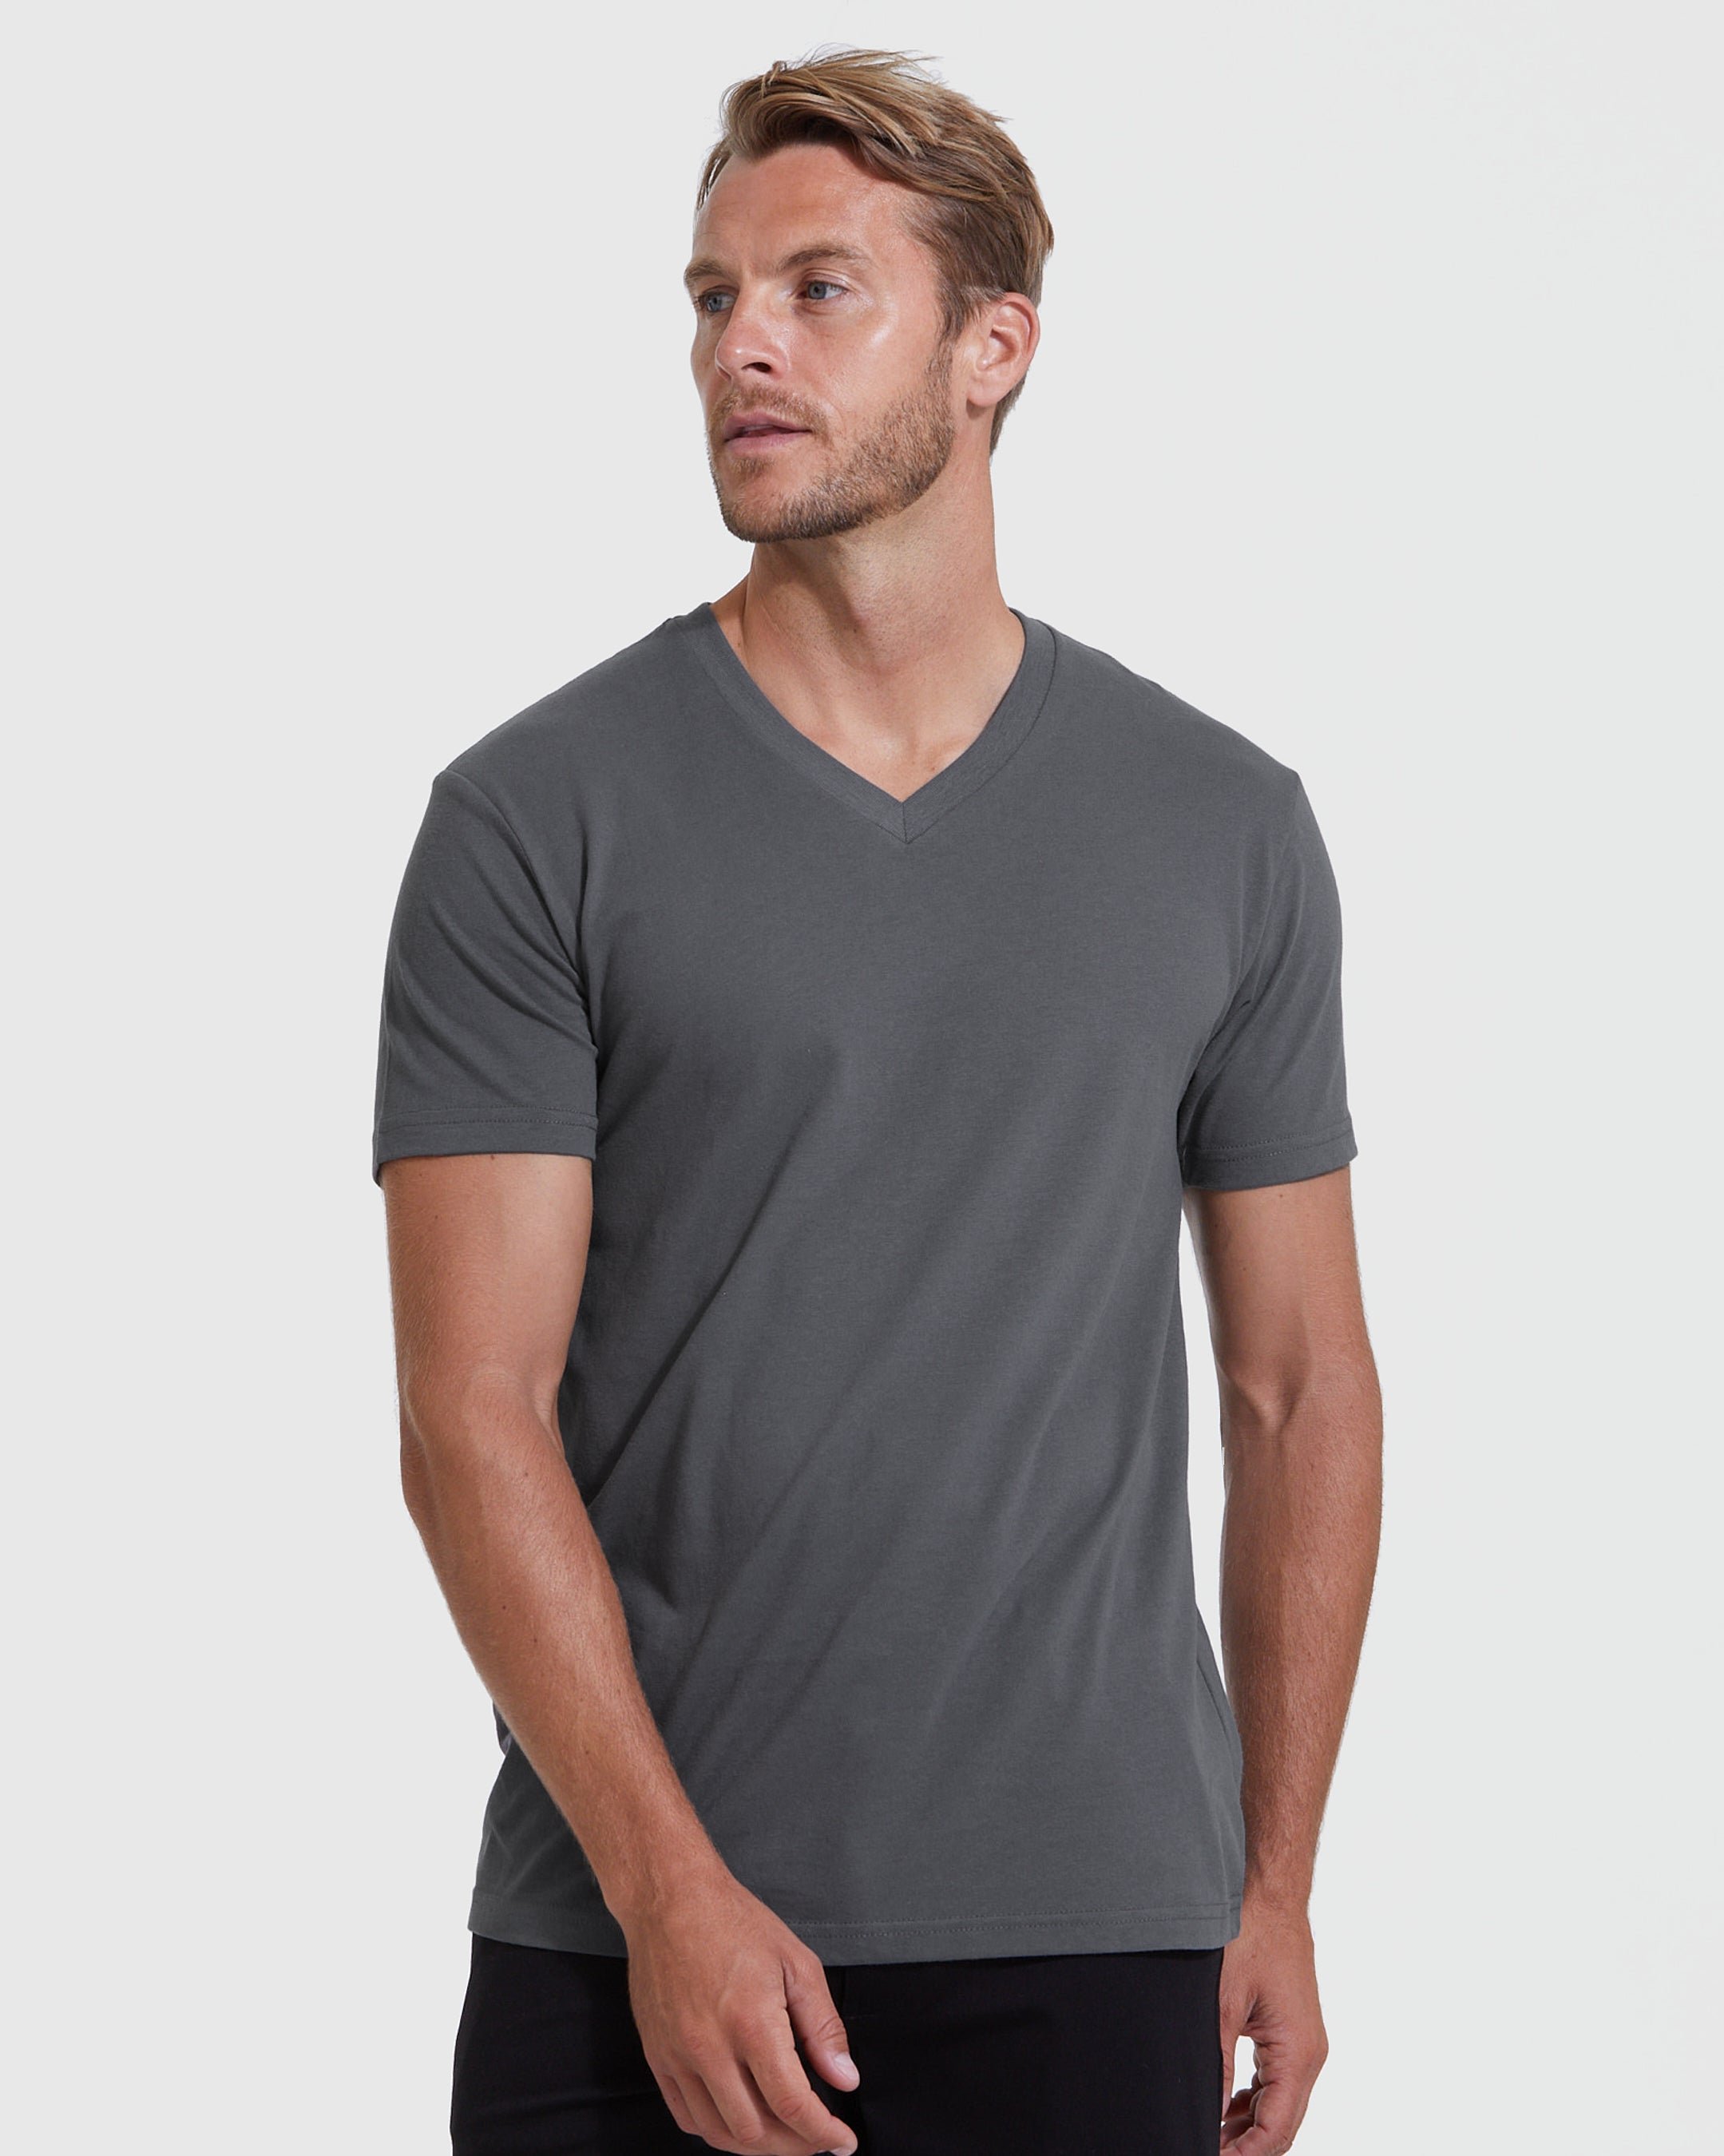 Carbon V-Neck T-Shirt